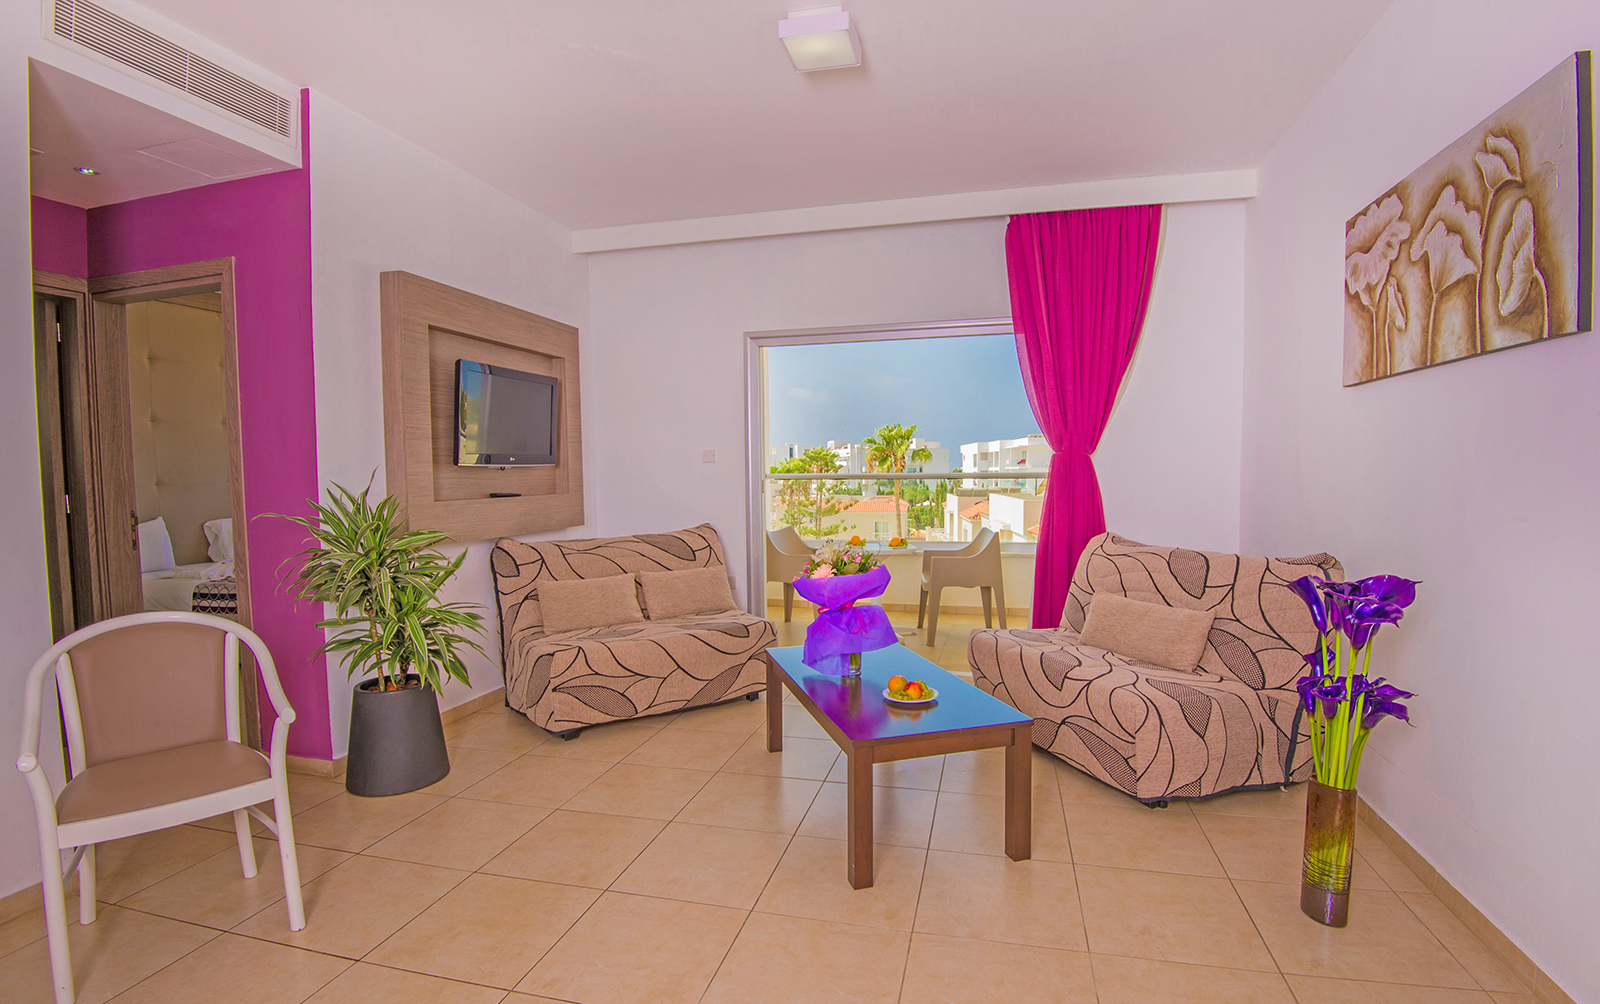 New Famagusta Hotel-Junior suite.jpg